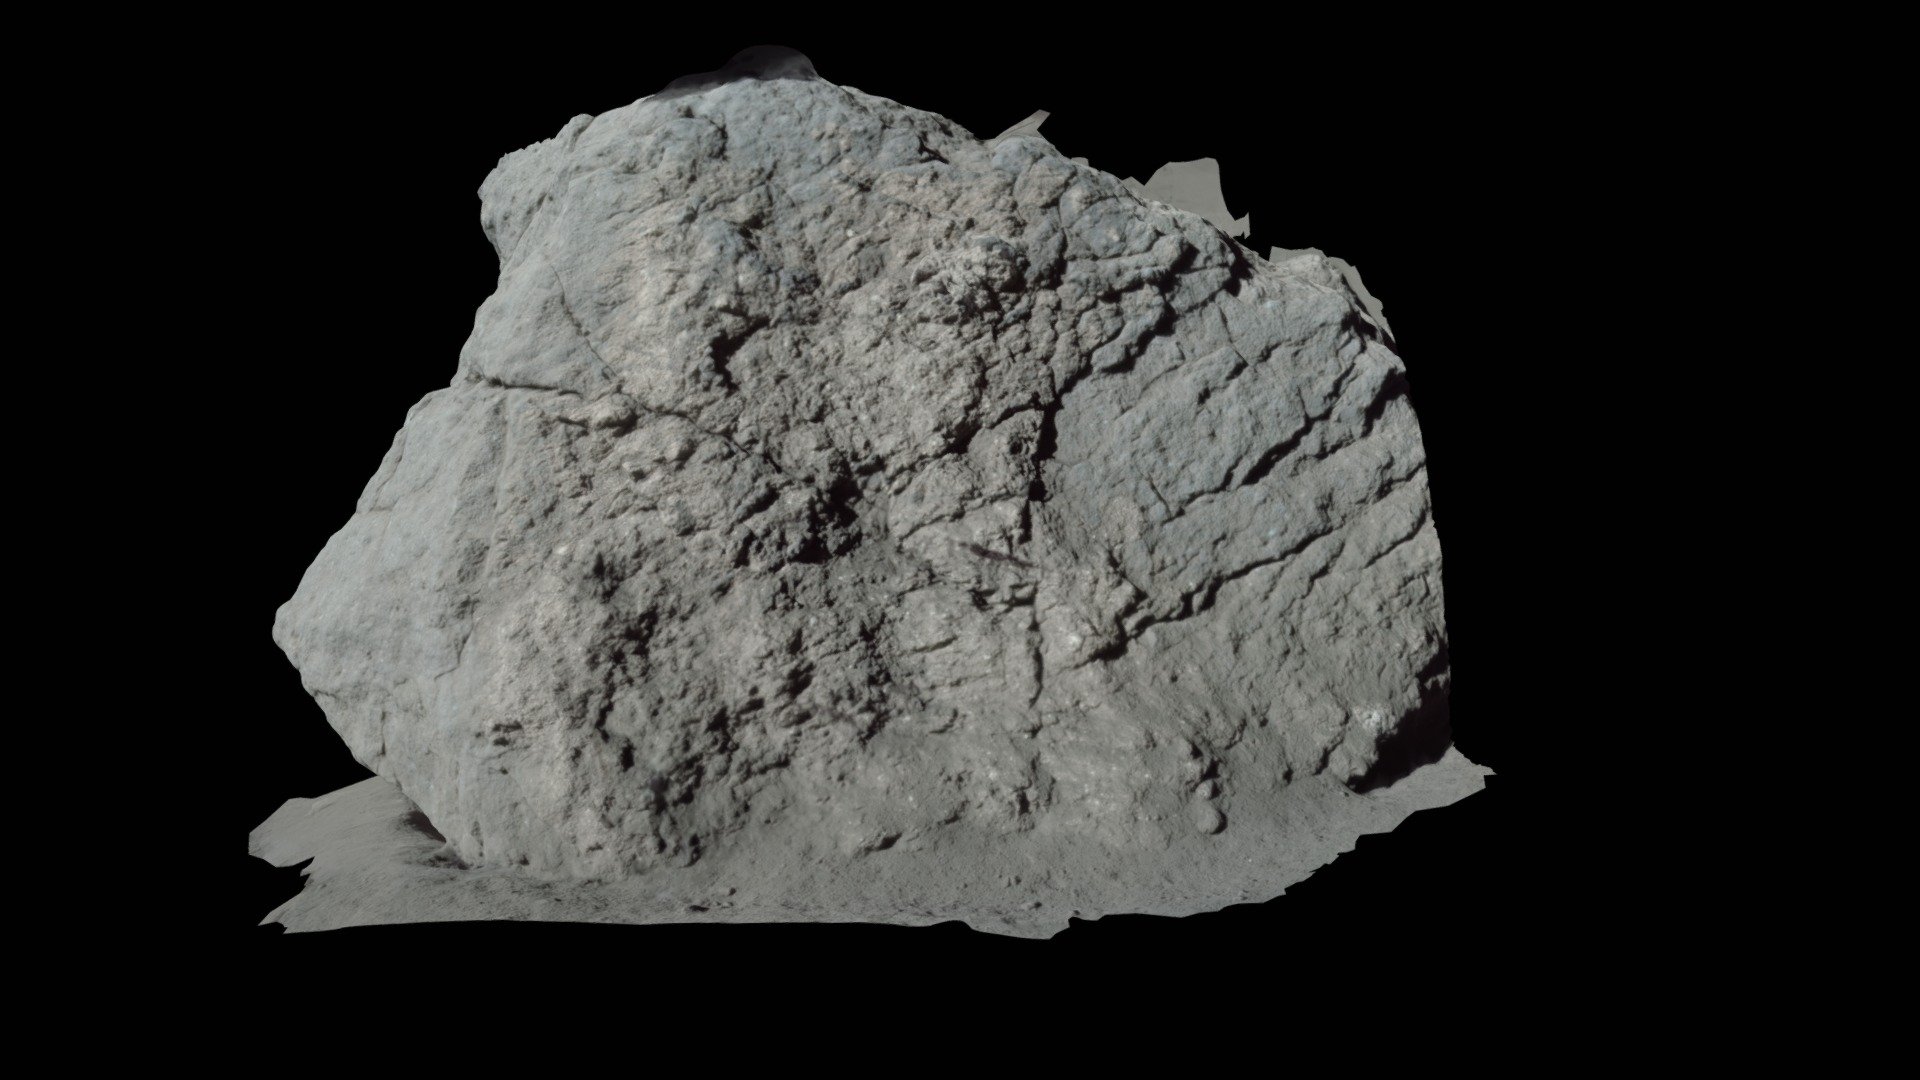 Apollo17 - lunar rock sampled on the Moon